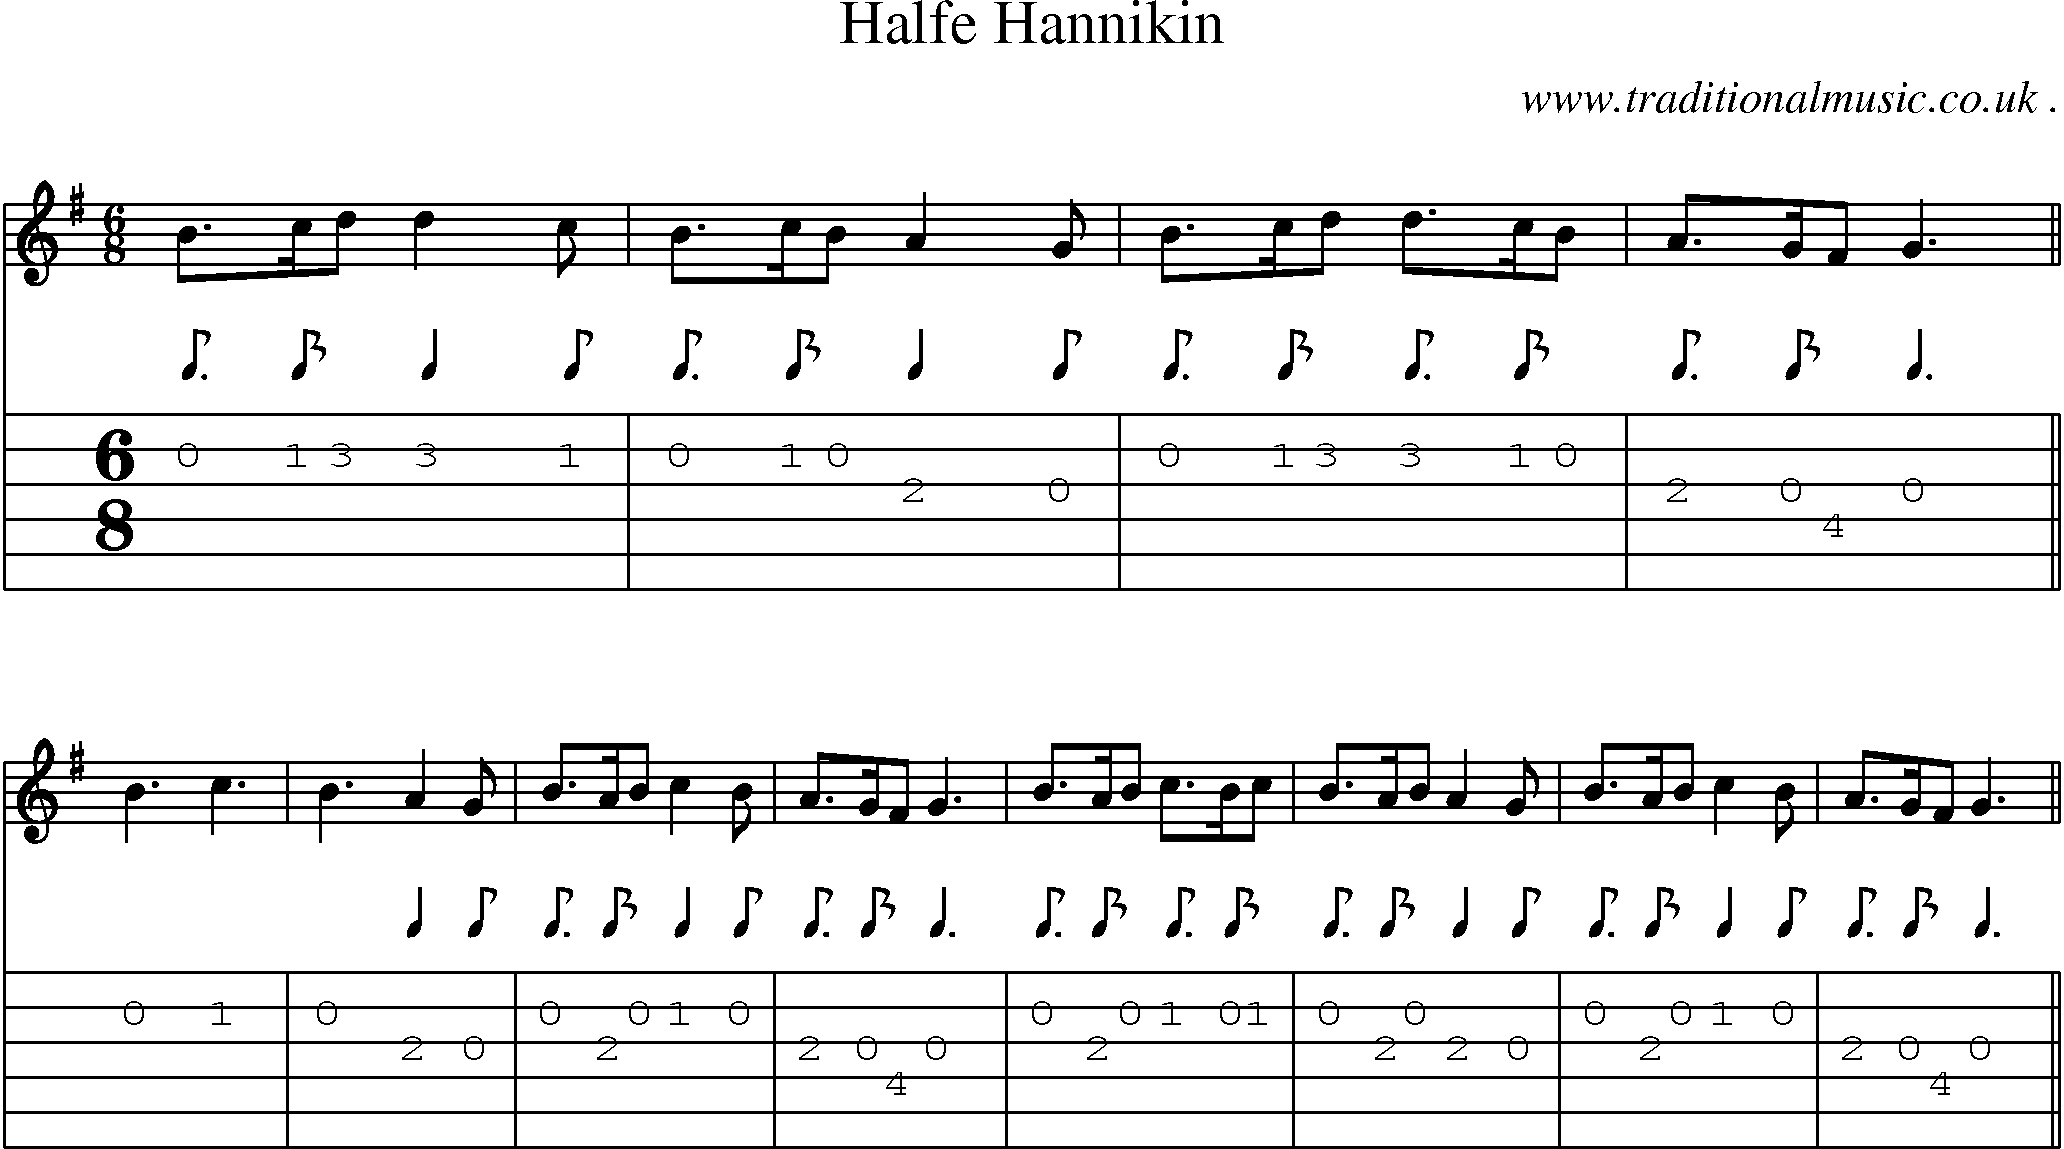 Sheet-Music and Guitar Tabs for Halfe Hannikin